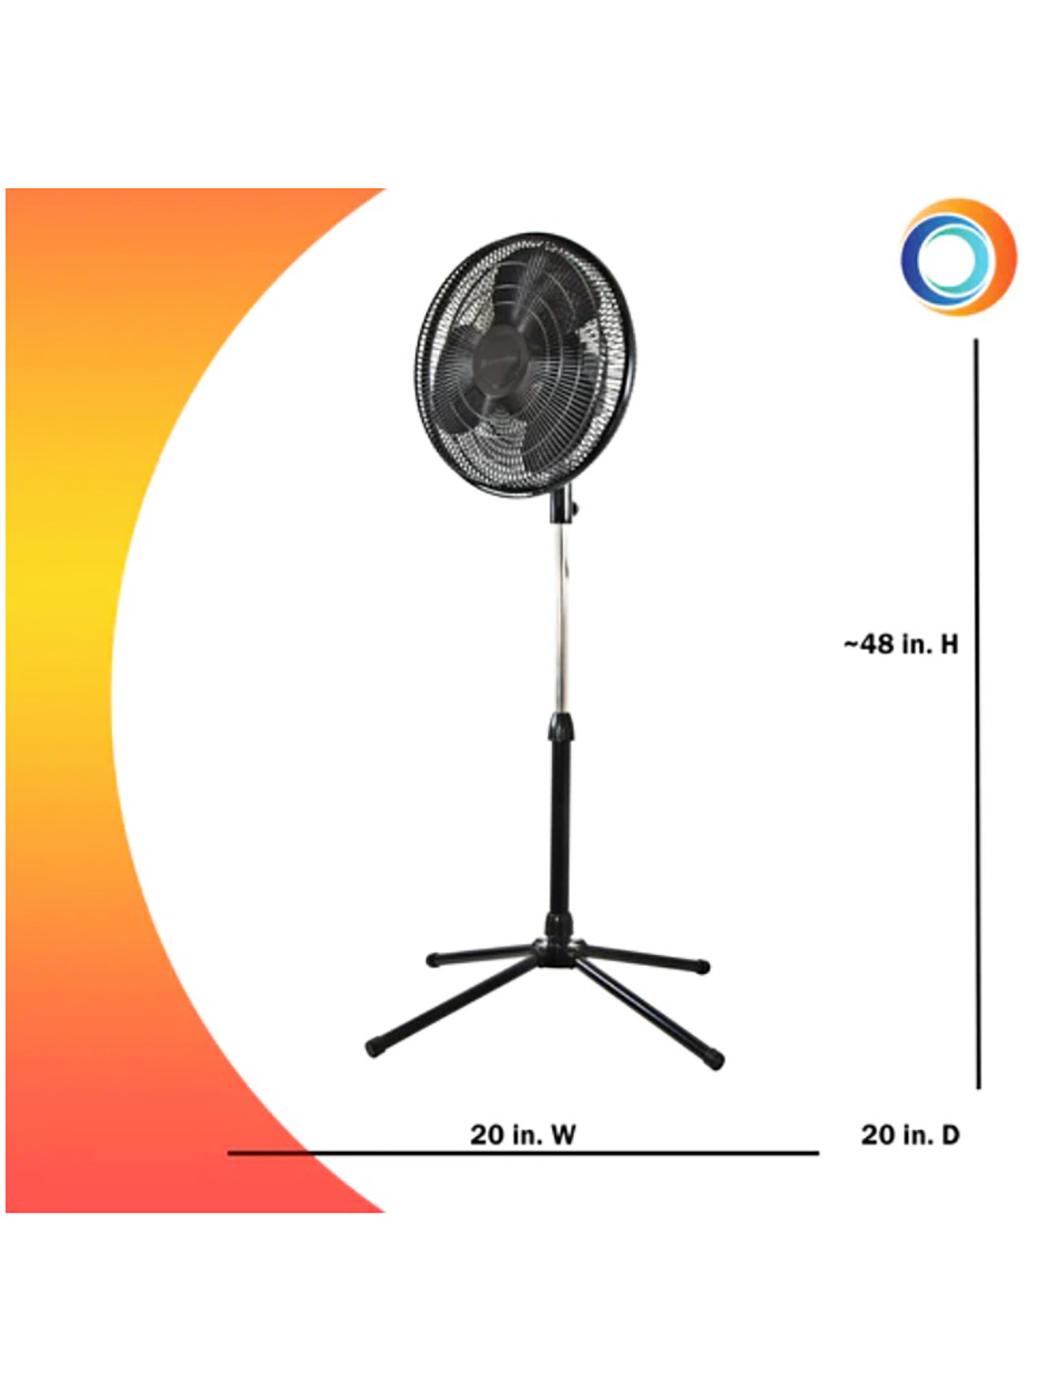 Comfort Zone Oscillating Adjustable 3-Speed Pedestal Fan - Black; image 2 of 2